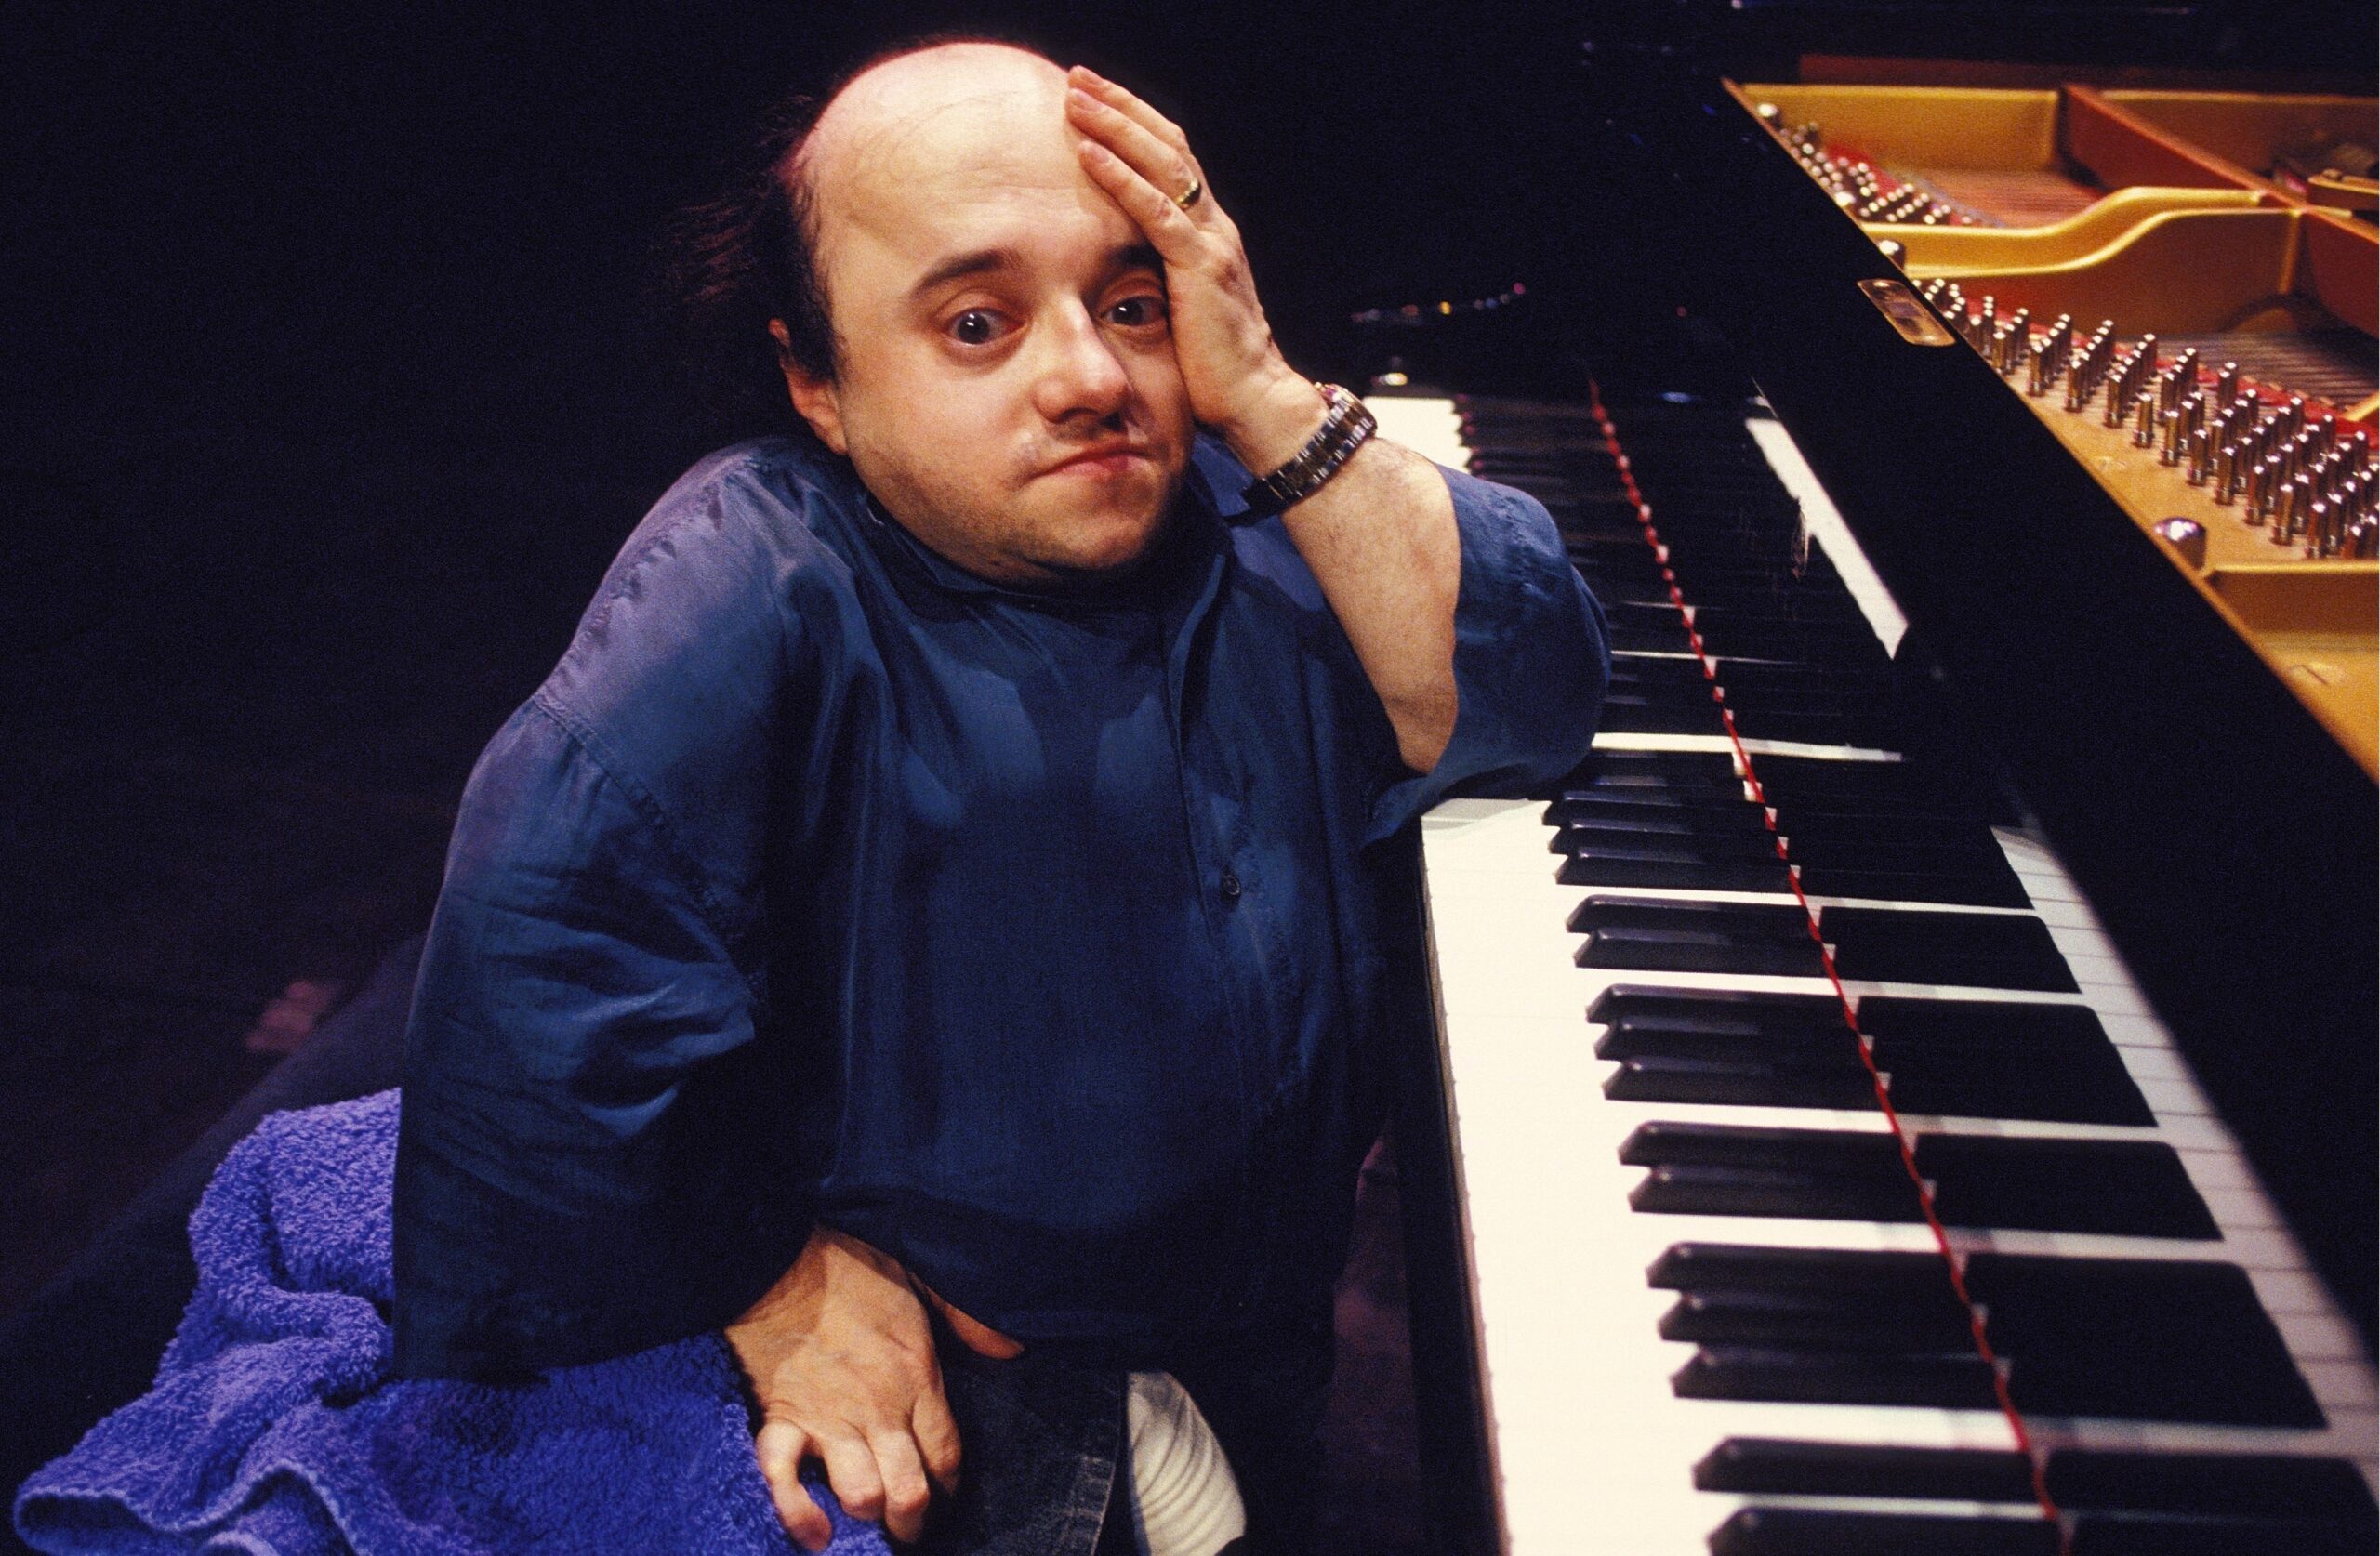 michel petrucciani, jazz piano legend